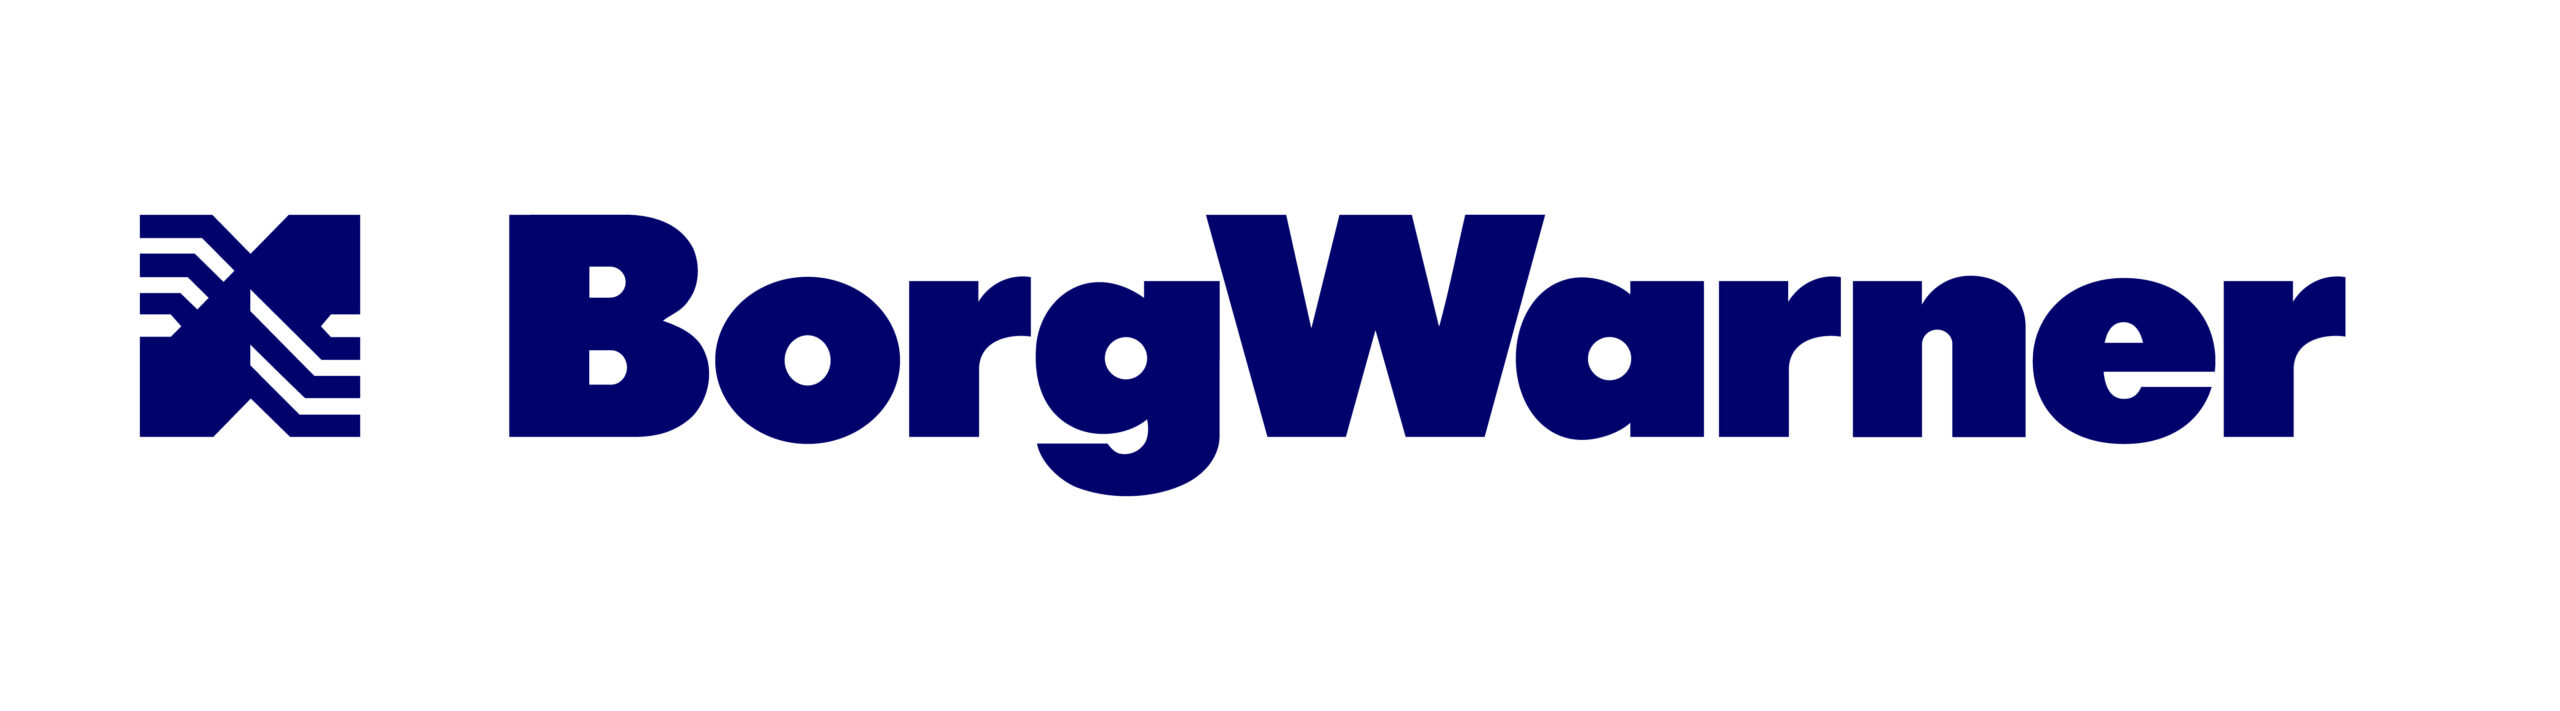 BorgWarner_Logo_Blue.jpg